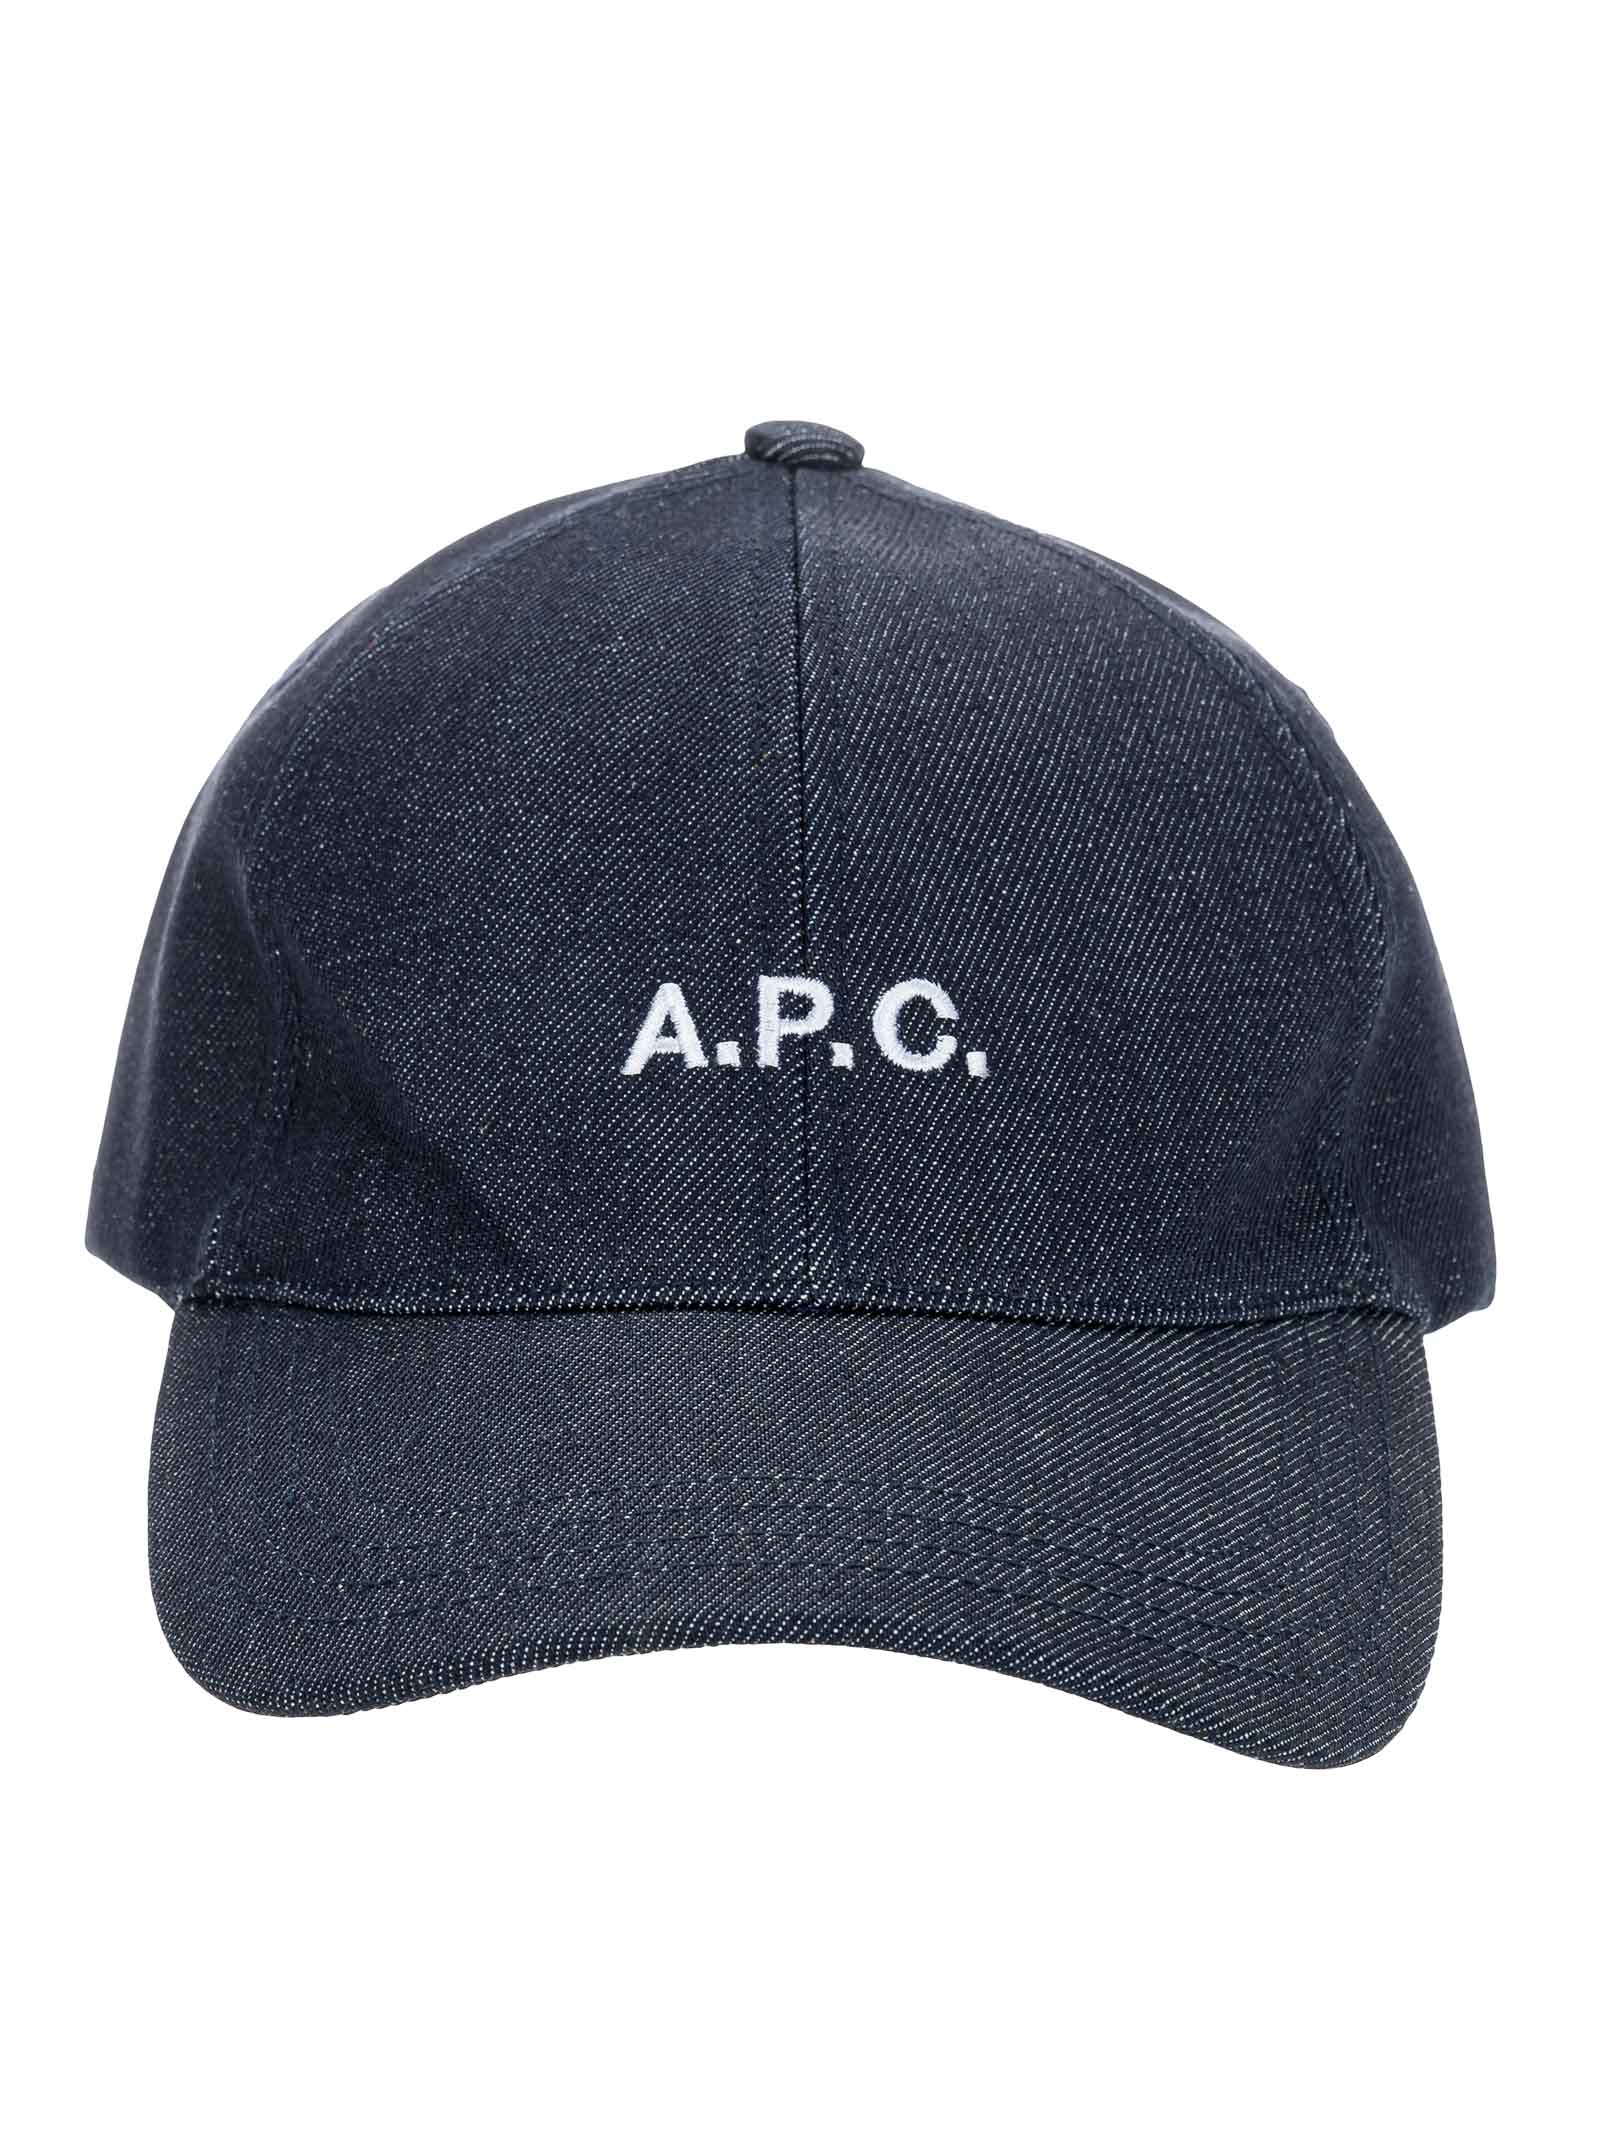 A.p.c. Charlie Baseball Cap